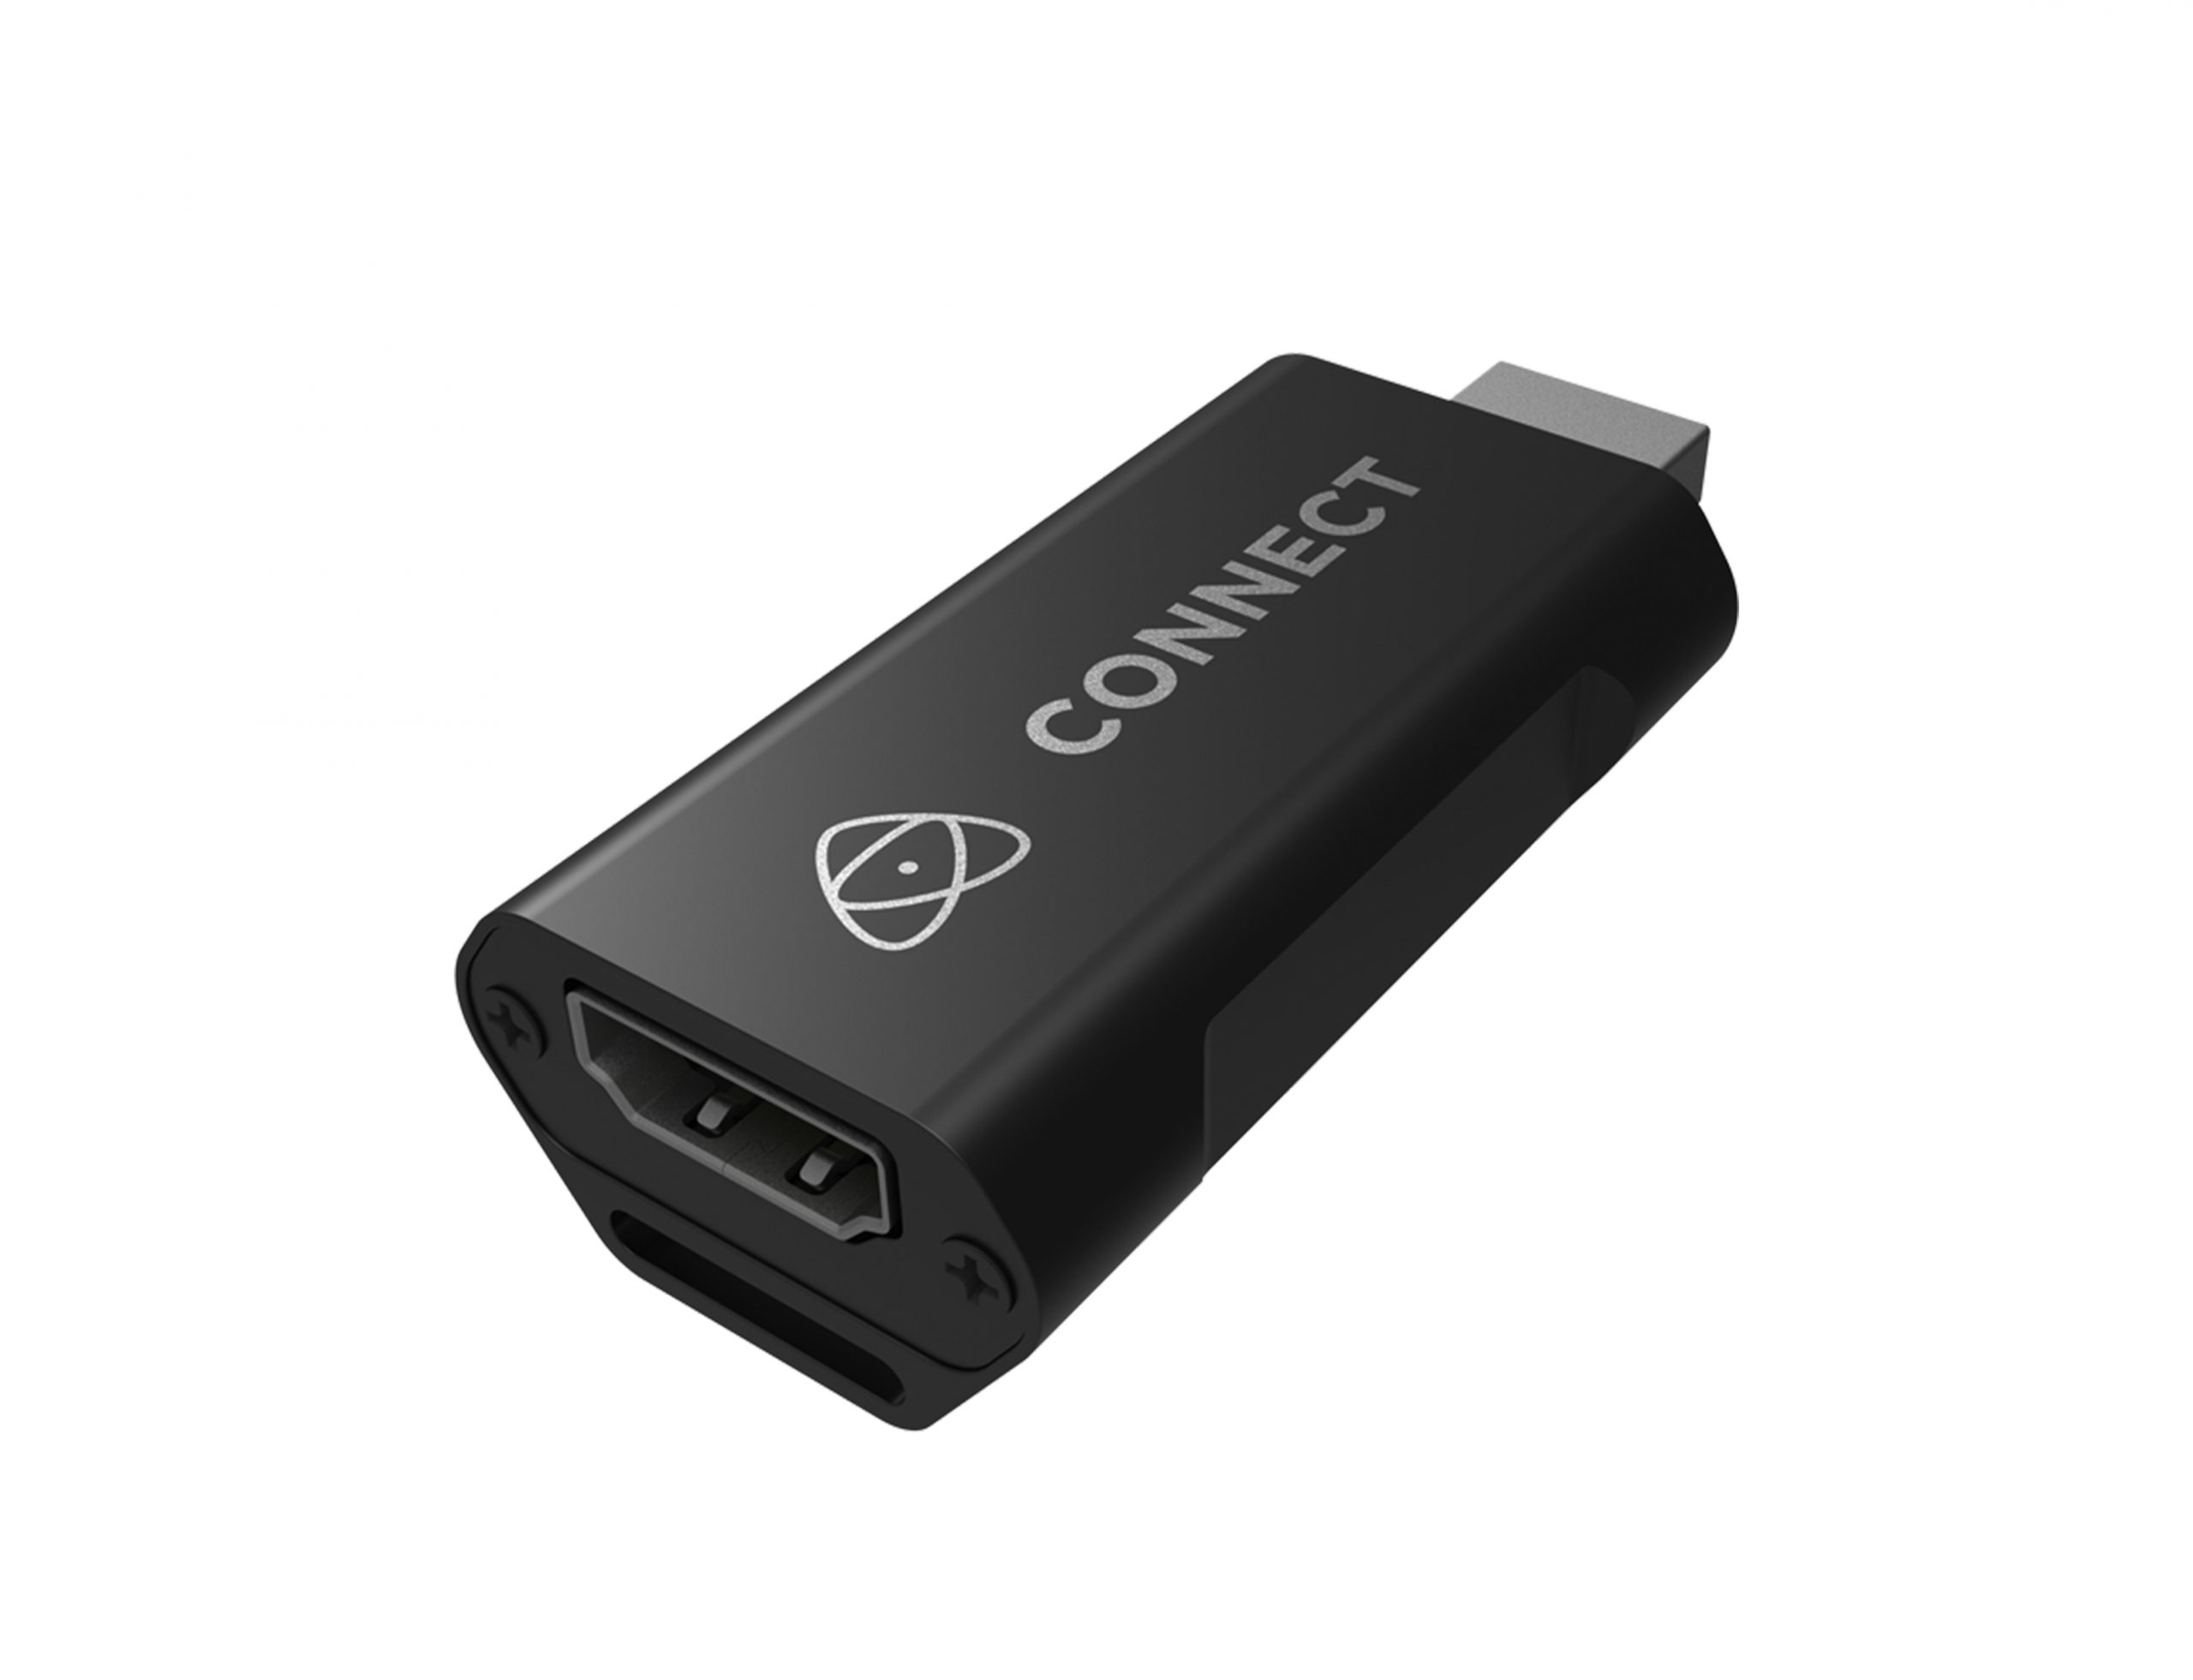 Atomos Connect 4K อุปกรณ์แปลงสัญญาณภาพ HDMI เป็น USB สำหรับสตรีมมิ่ง ผ่านโปรแกรม OBS, Wirecast, X-Split, Twitch, Facebook Live, Youtube Live ฯลฯ รองรับสัญญาณ HDMI 4K30 แปลงเป็น USB 1080p60 ราคา 3900 บาท